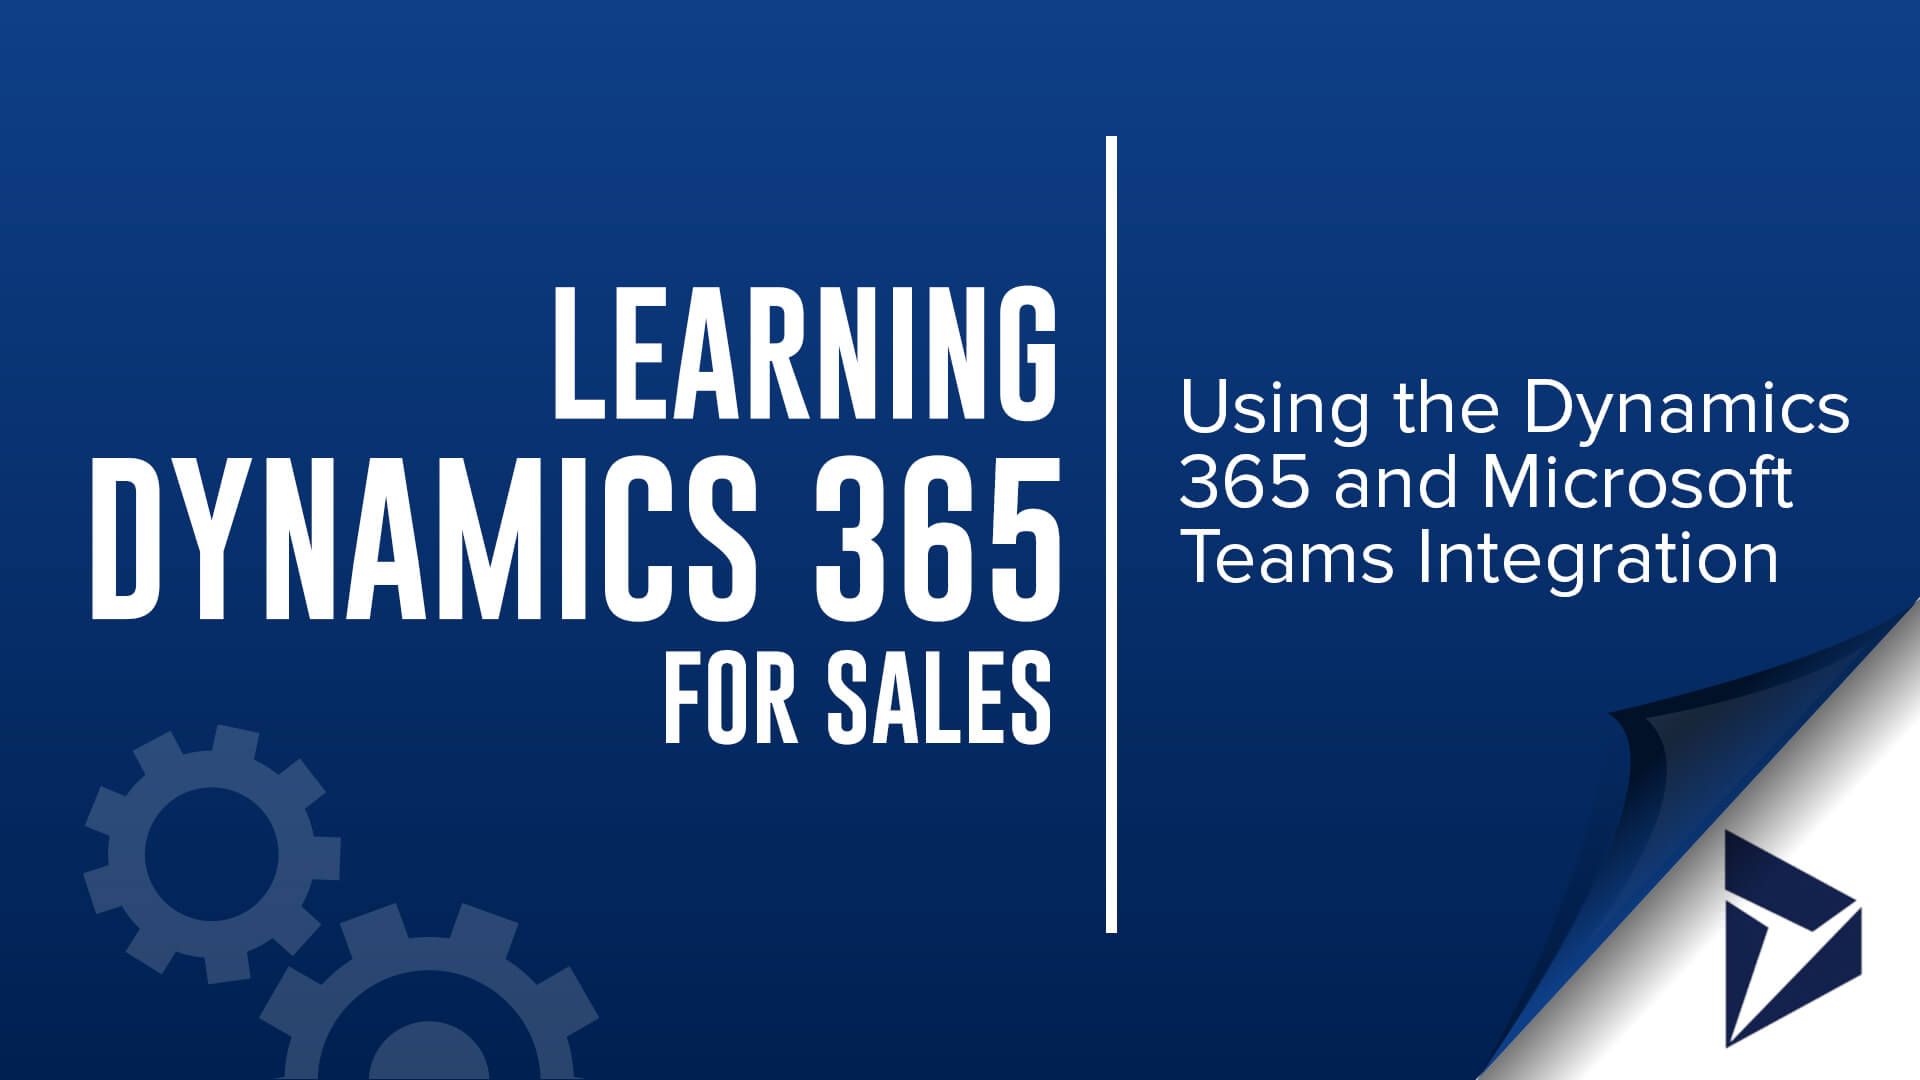 Using The Dynamics 365 and Microsoft Teams Integration